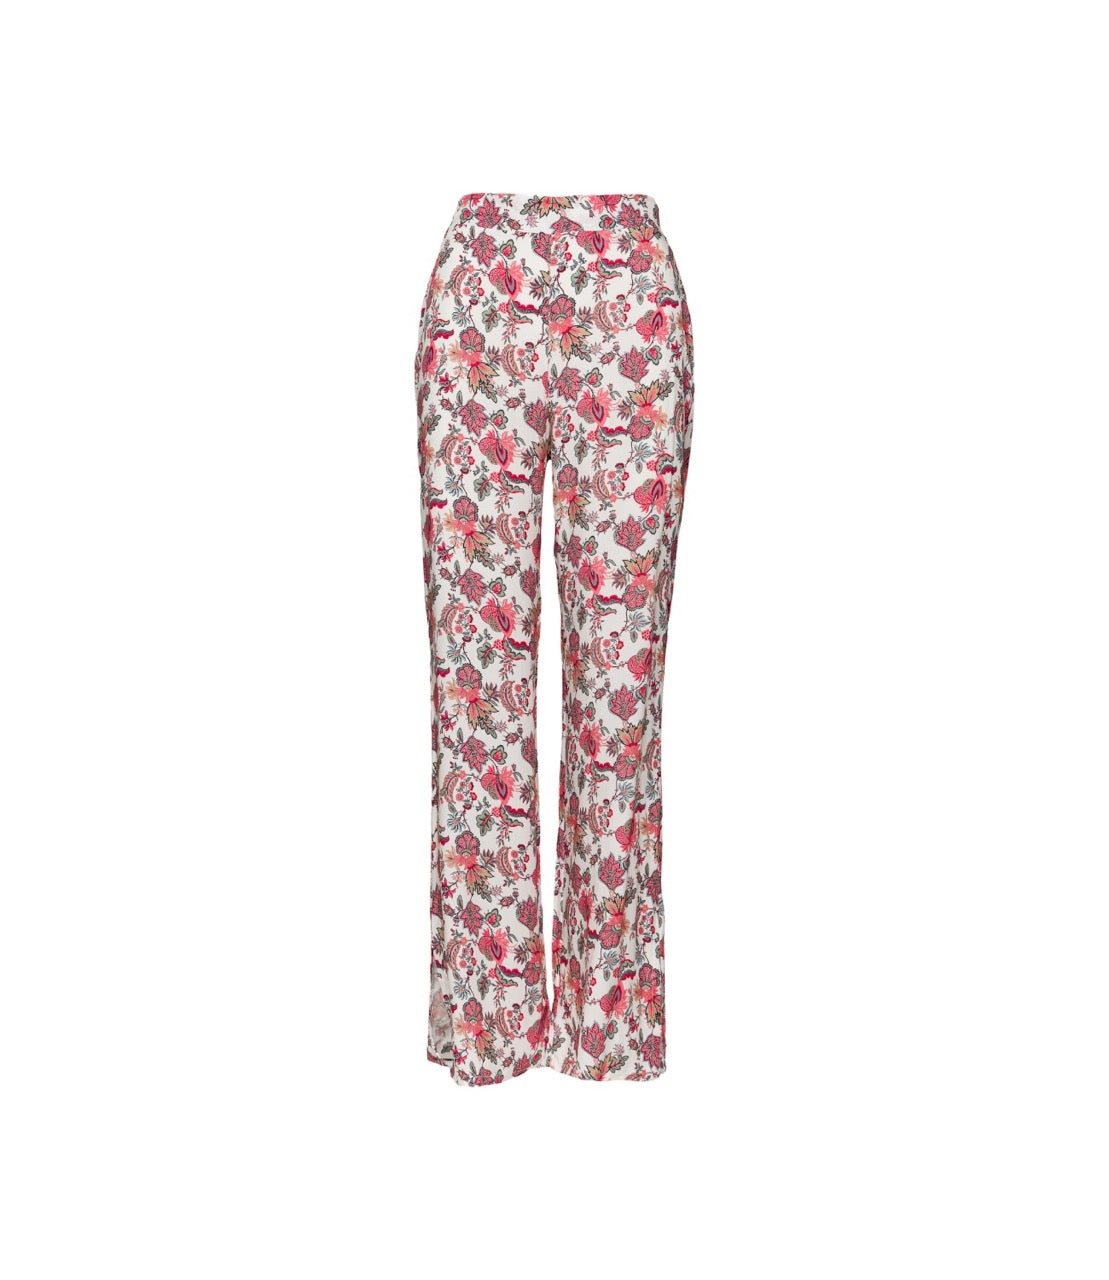 Saiph flower print cream pants